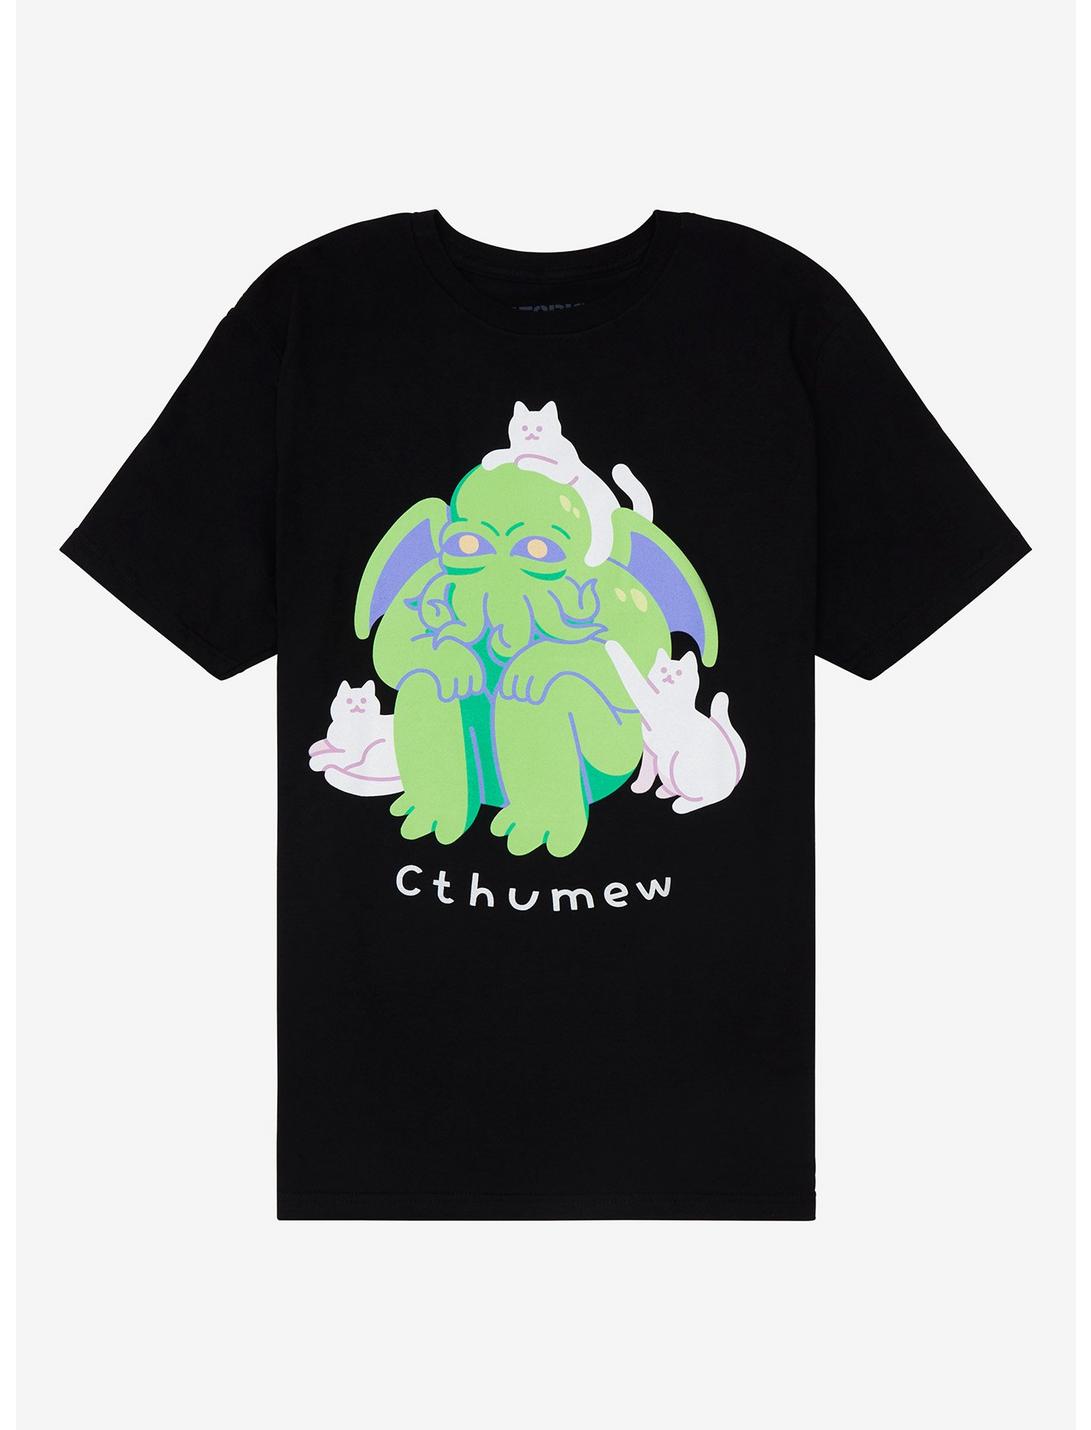 Cthumew Cats & Cthulhu T-Shirt By Obinsun | Hot Topic